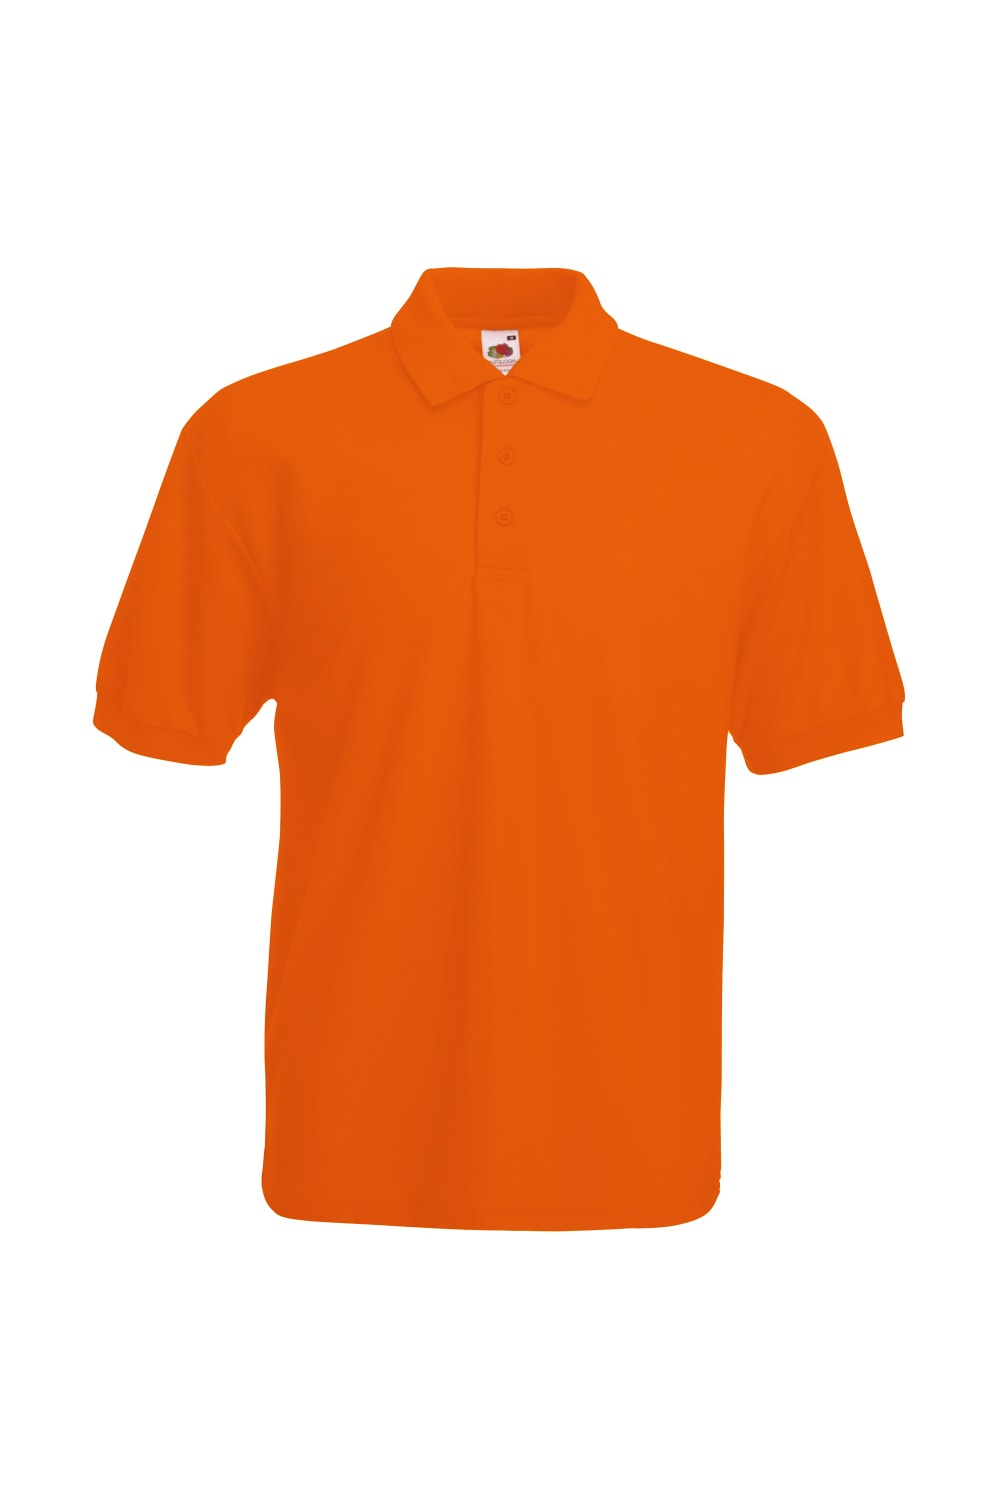 Fruit Of The Loom Mens 65/35 Pique Short Sleeve Polo Shirt (Orange)